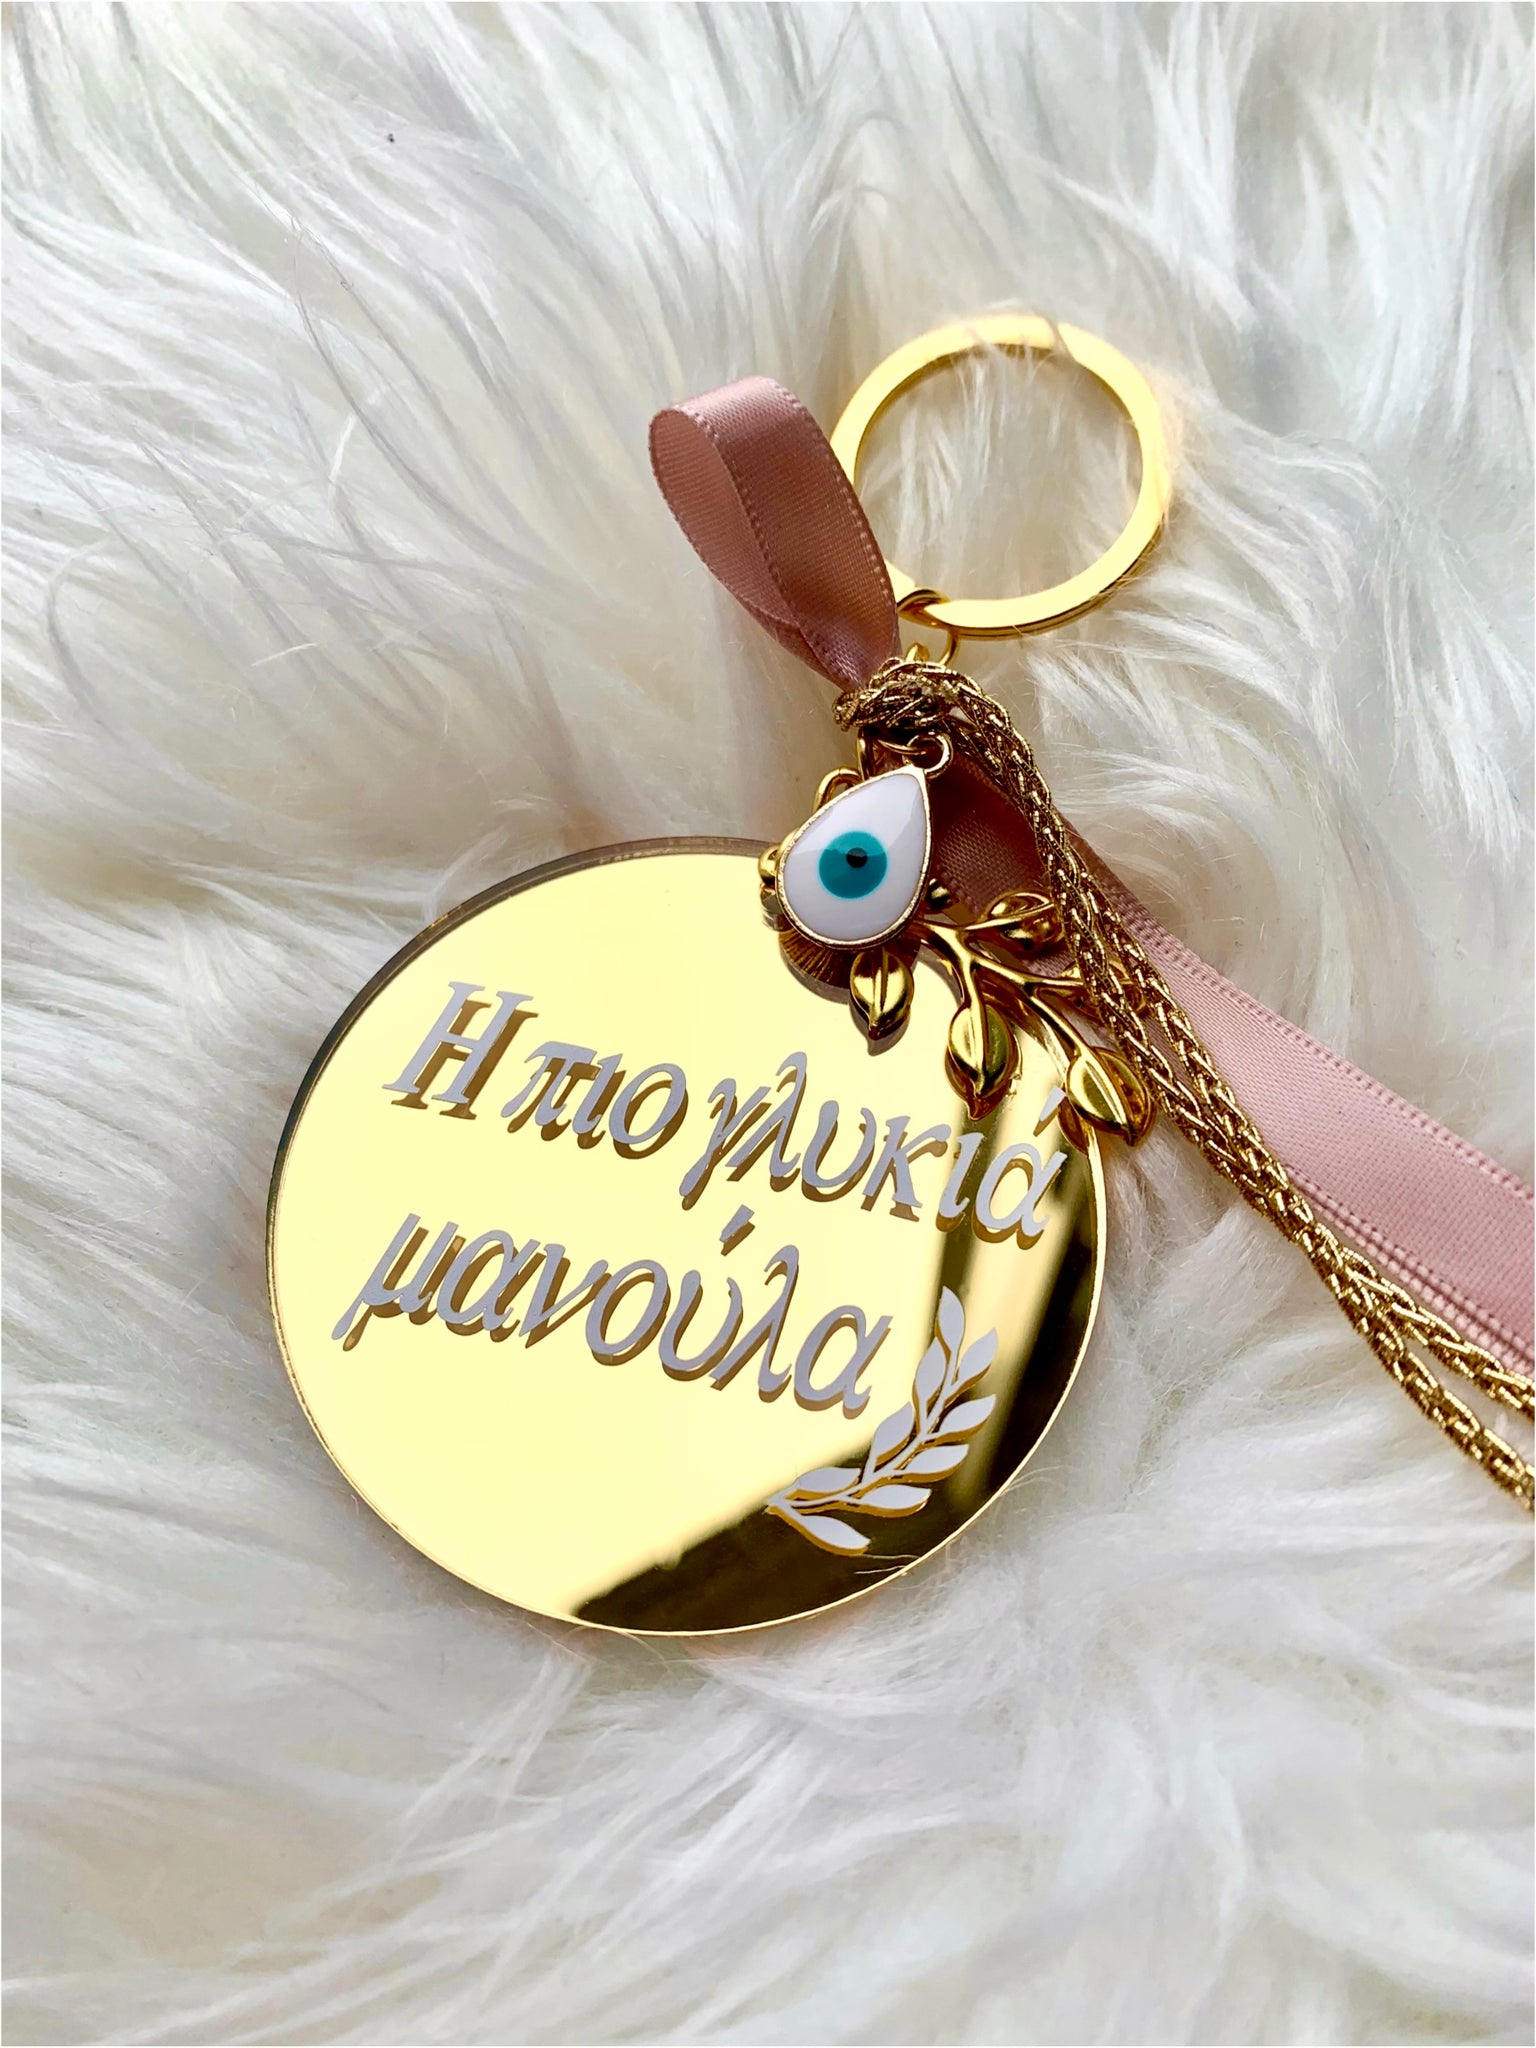 H Pio Glukia Manoula / The sweetest Mom  Gold Mirror Keychain